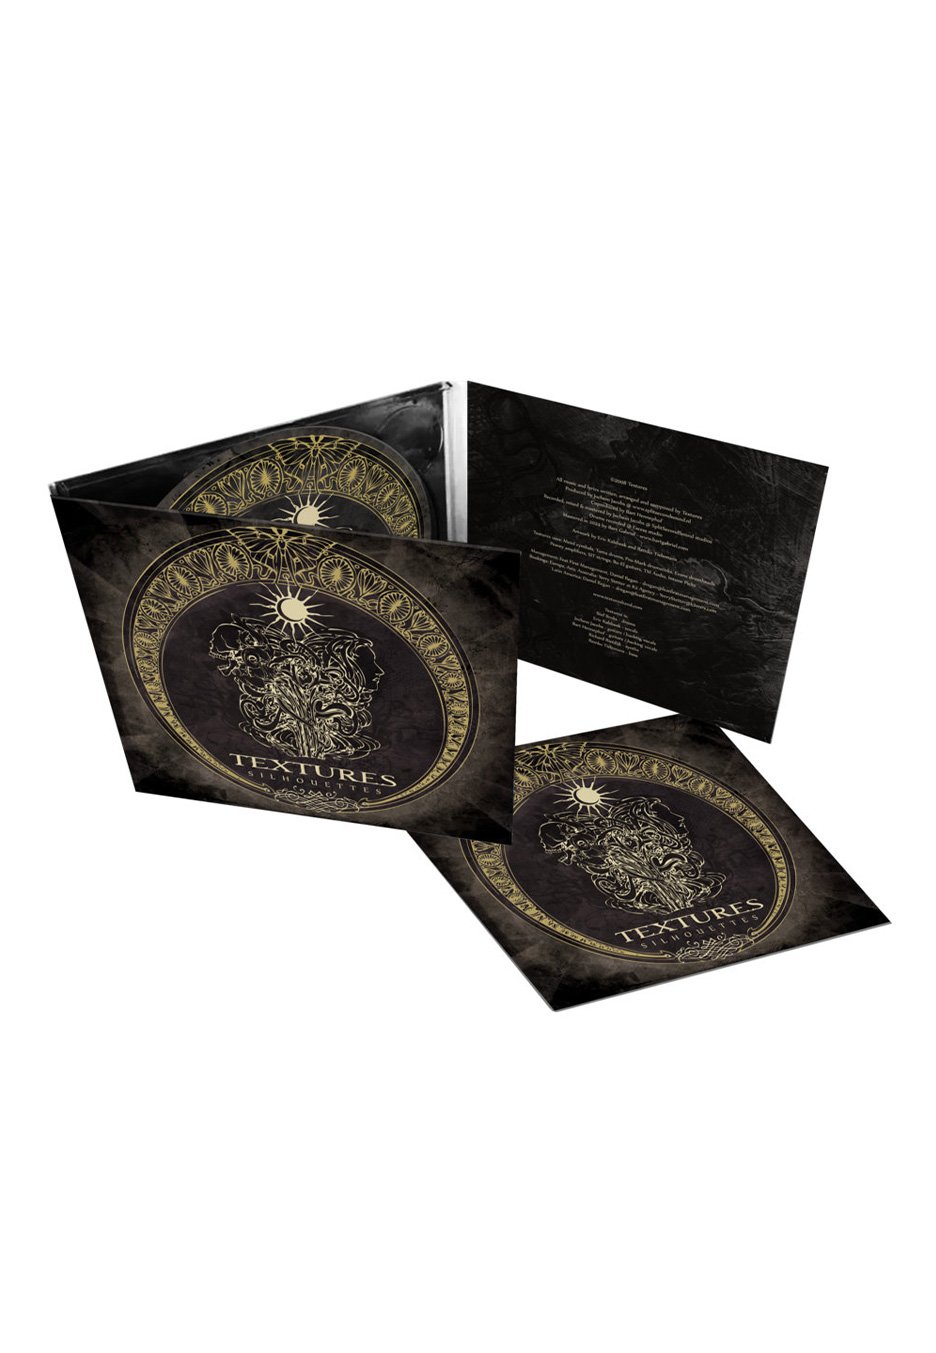 Textures - Silhouettes Ltd. - Digipak CD